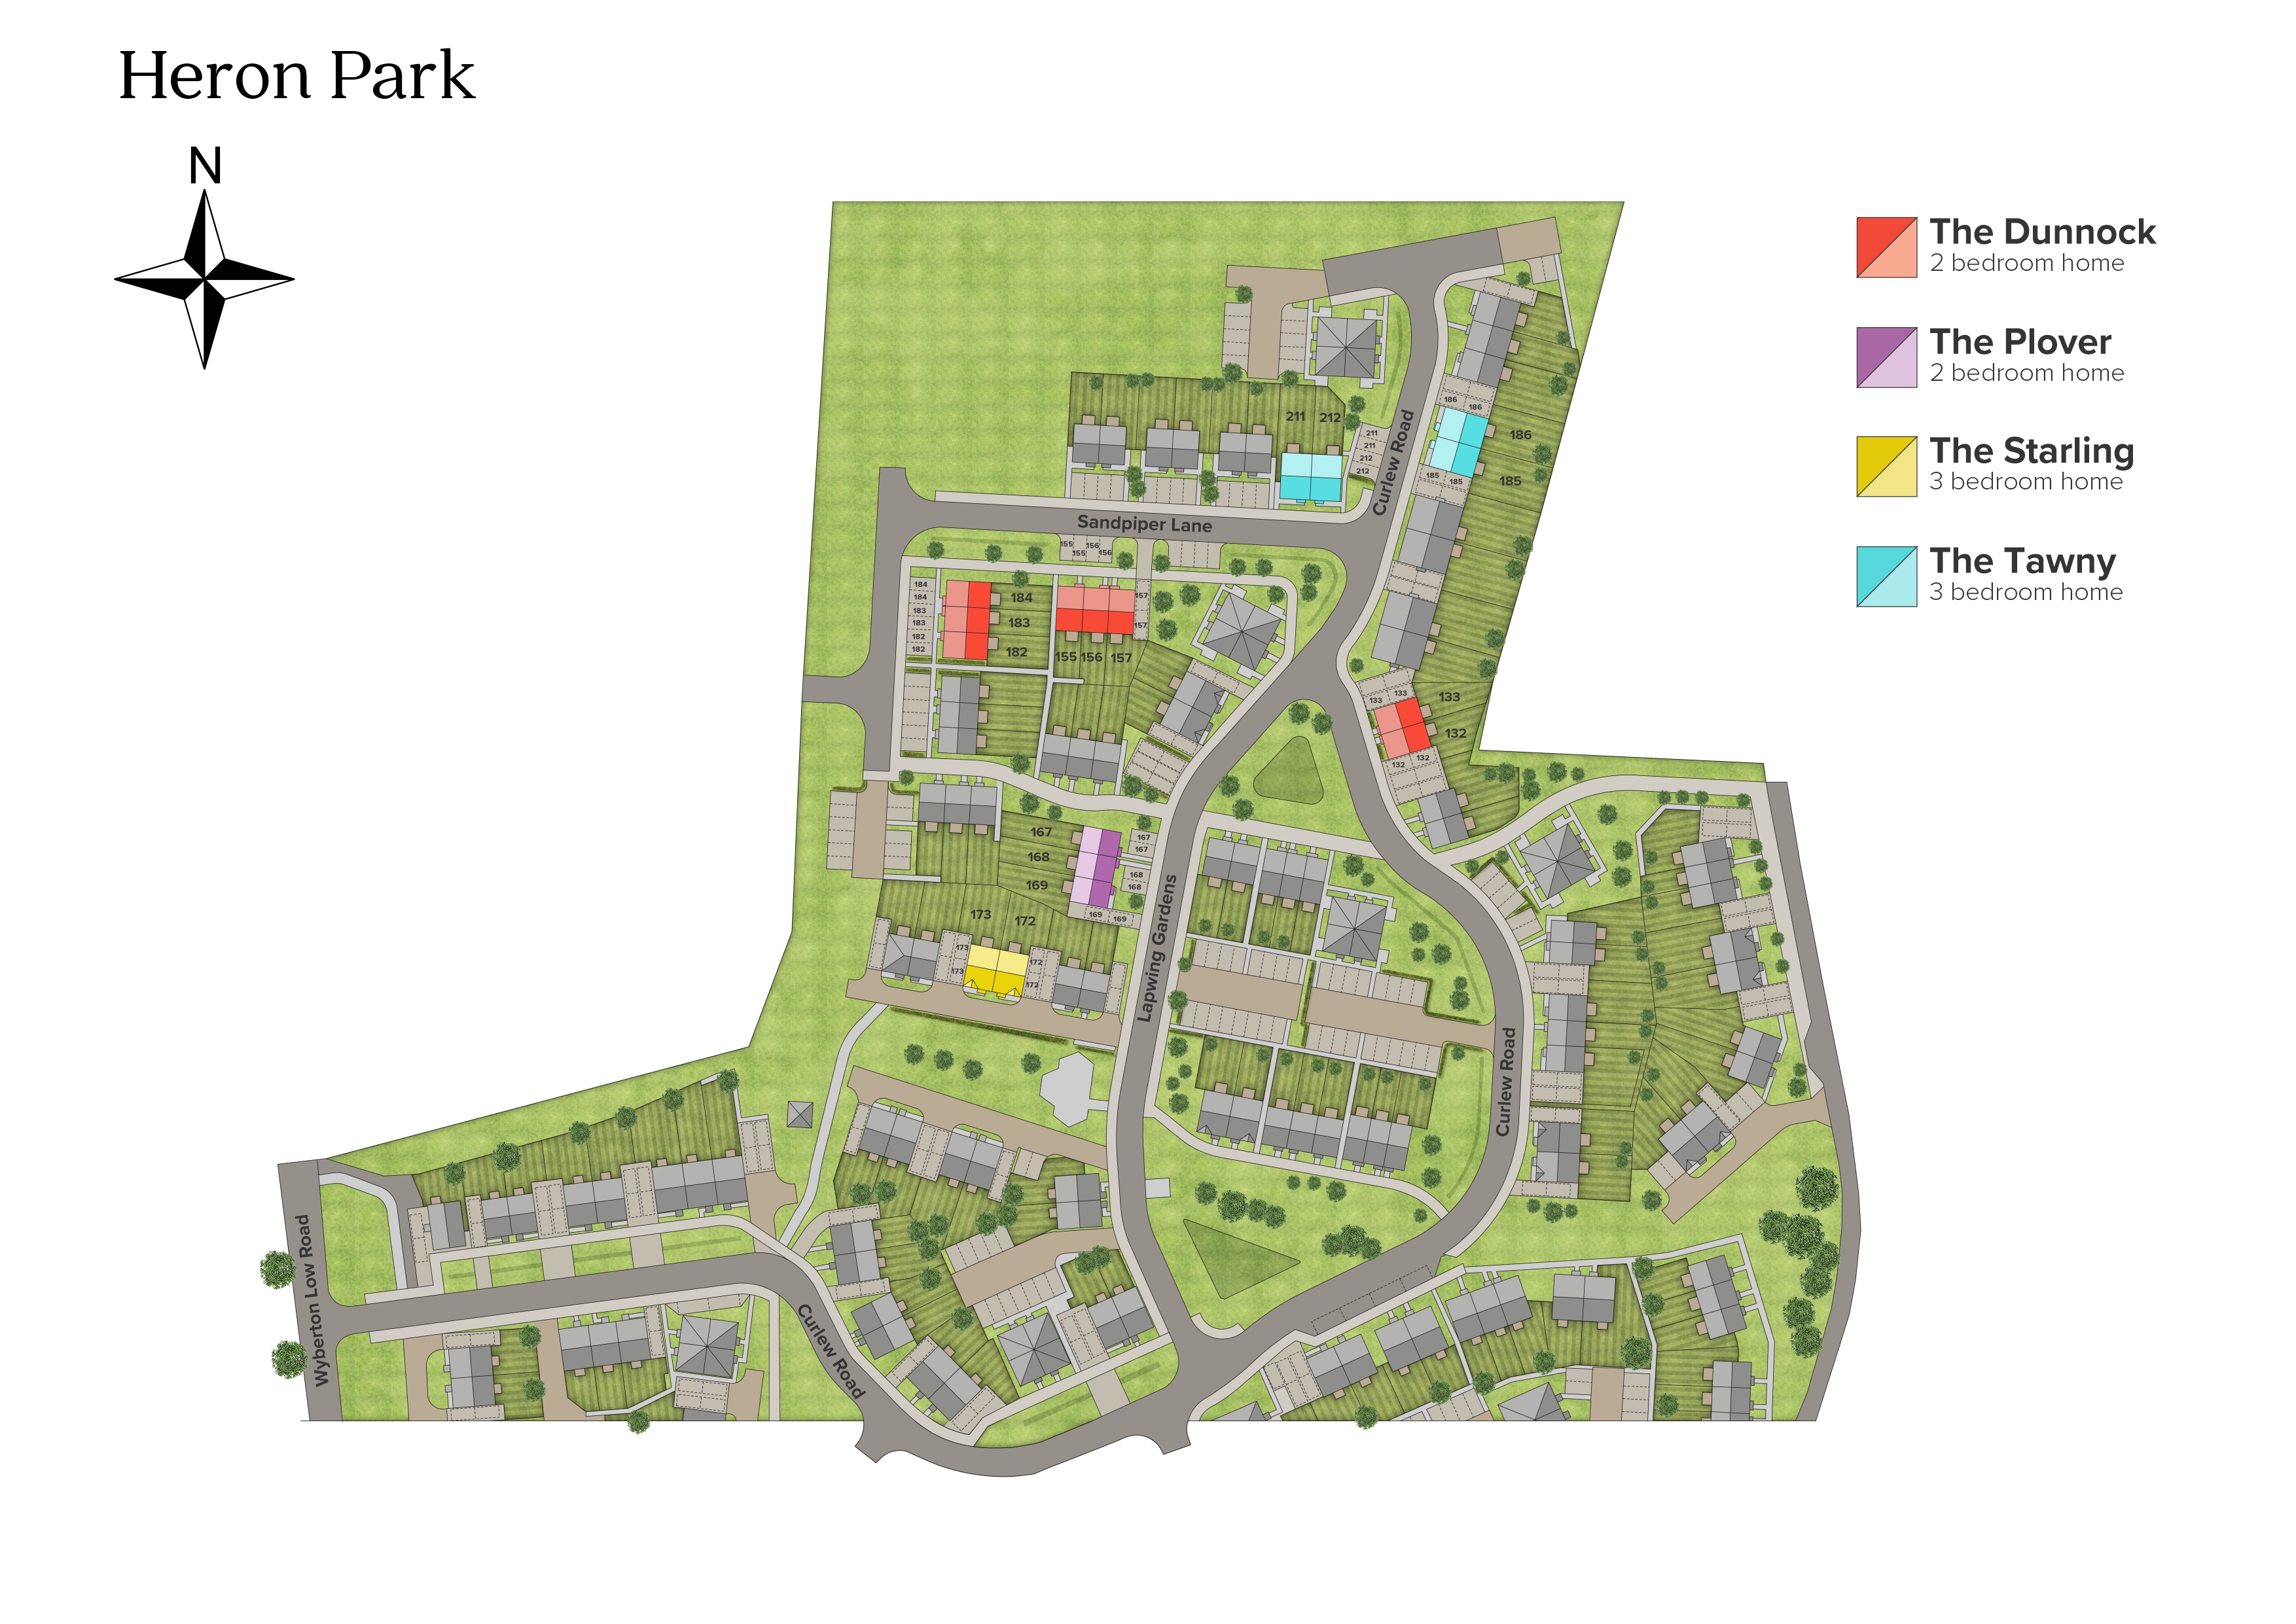 Heron Park development plan